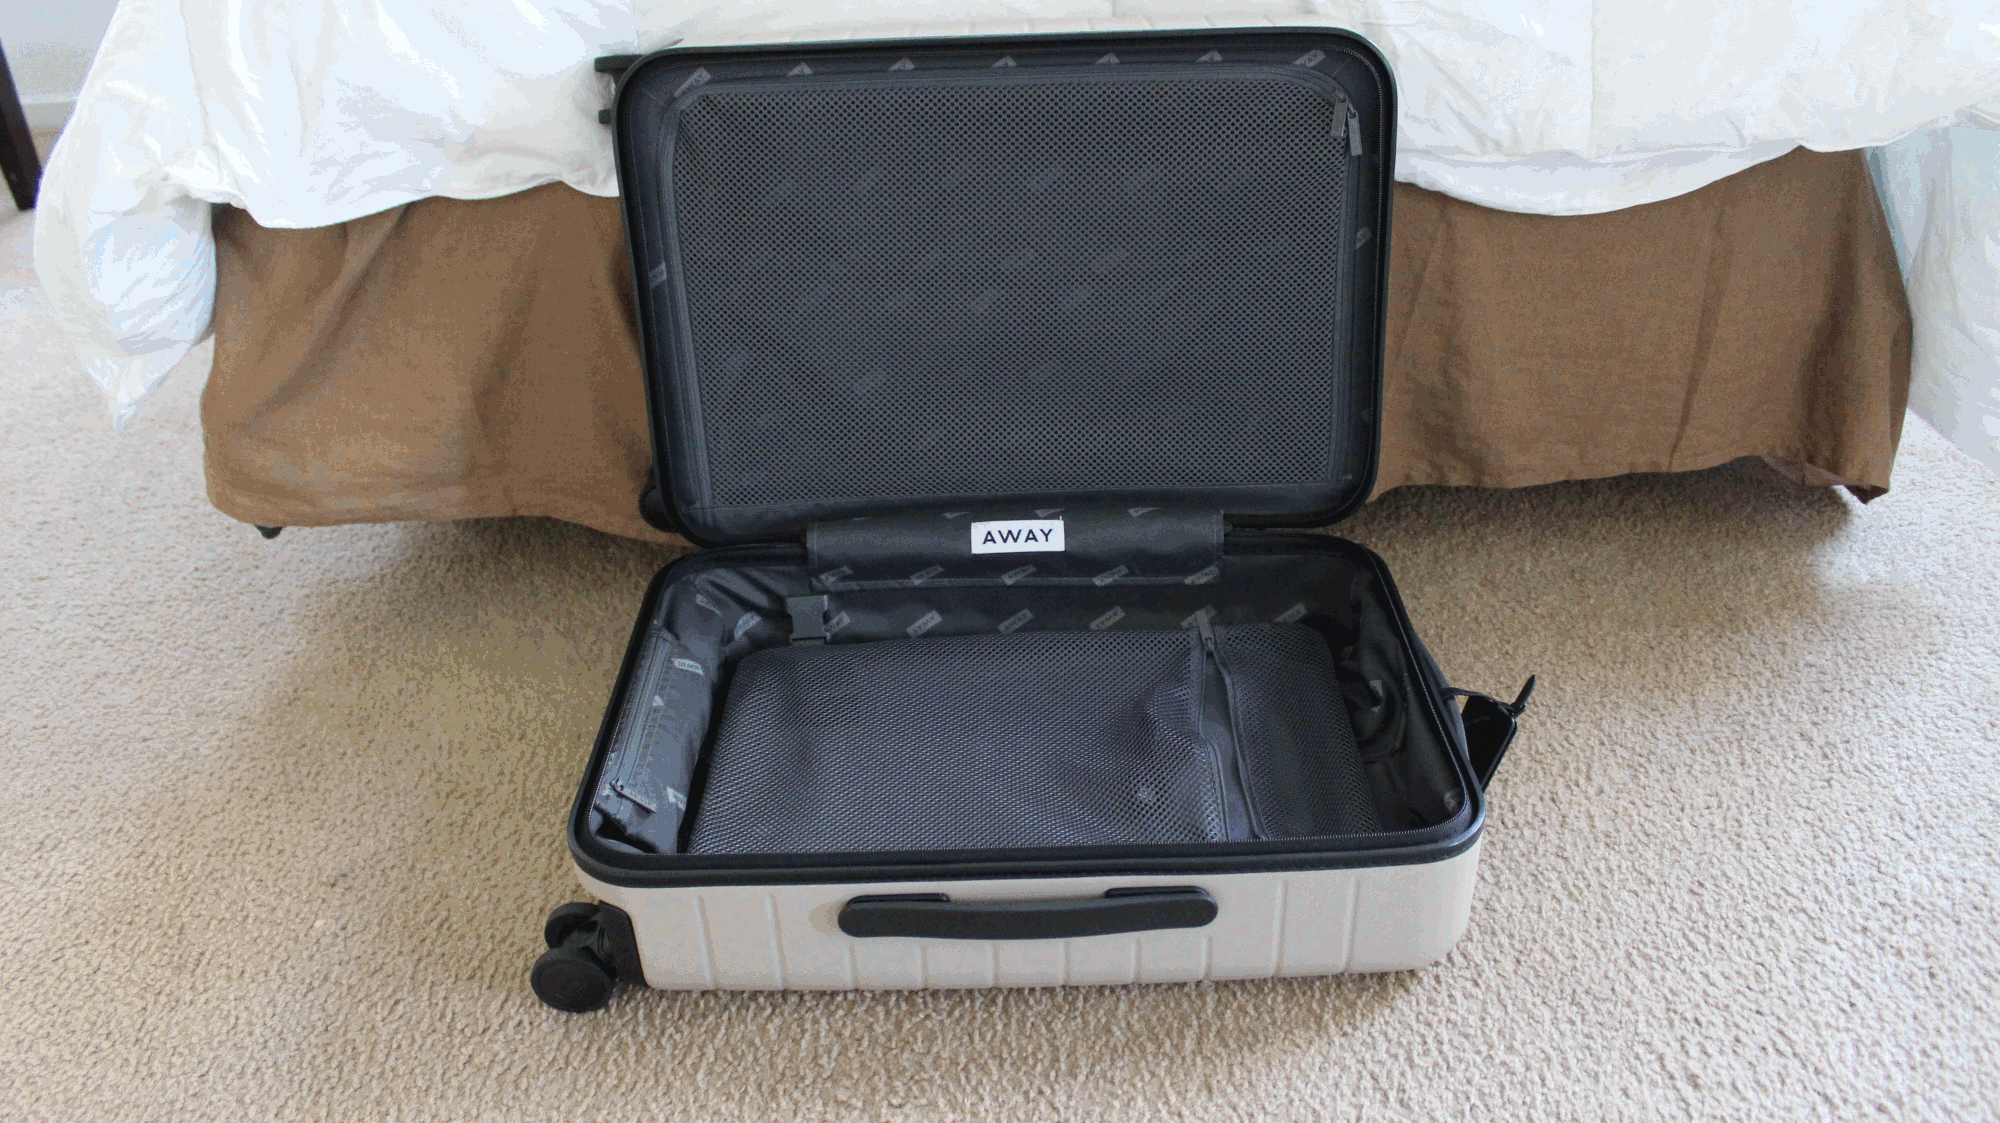 Away suitcase